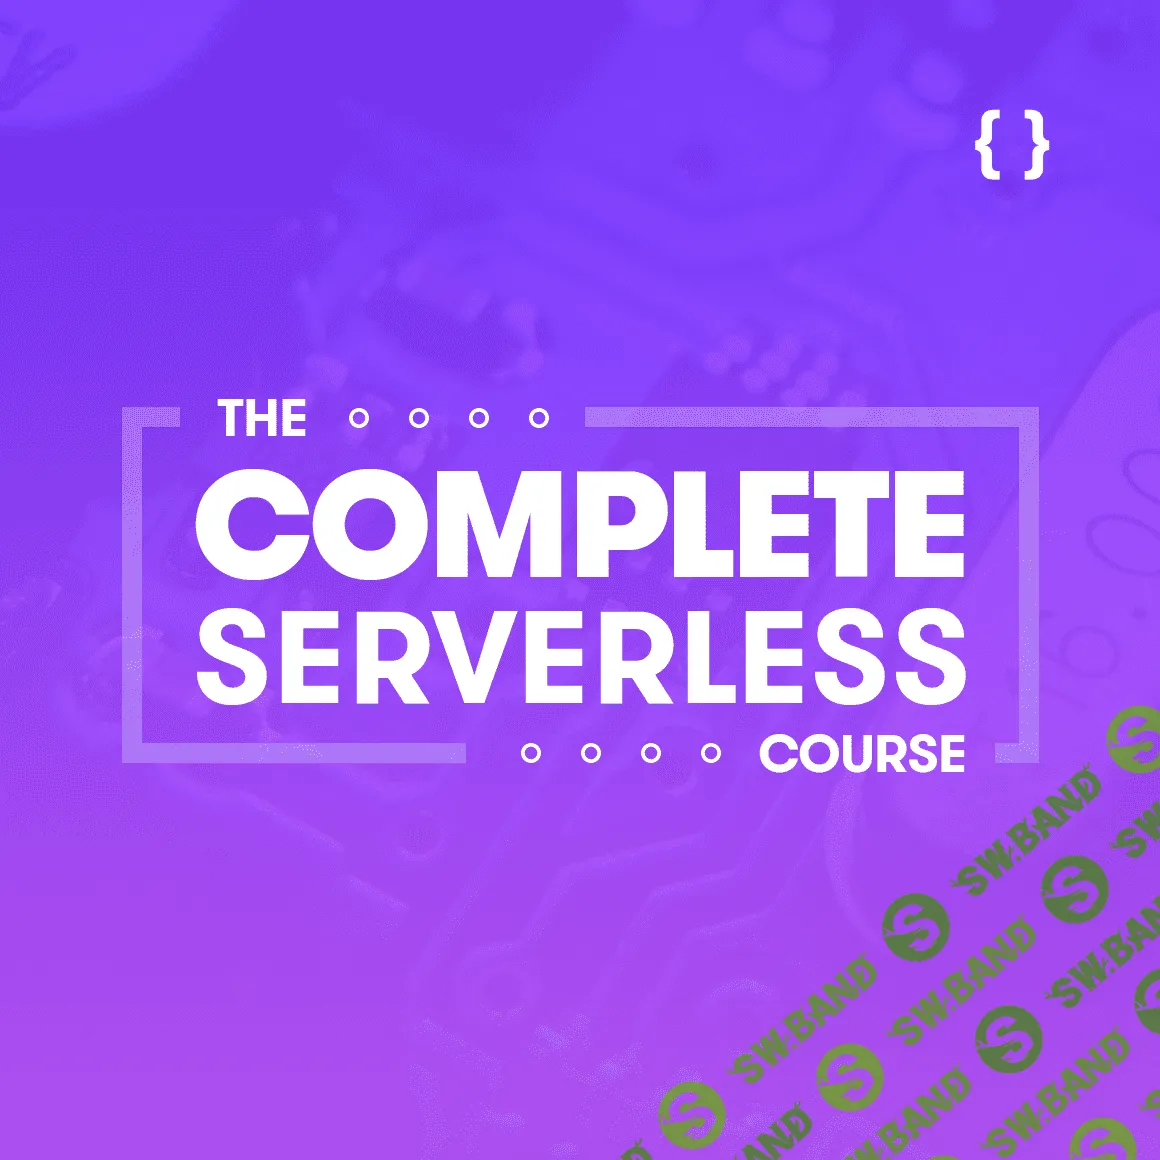 [acloud.guru] The Complete Serverless Course